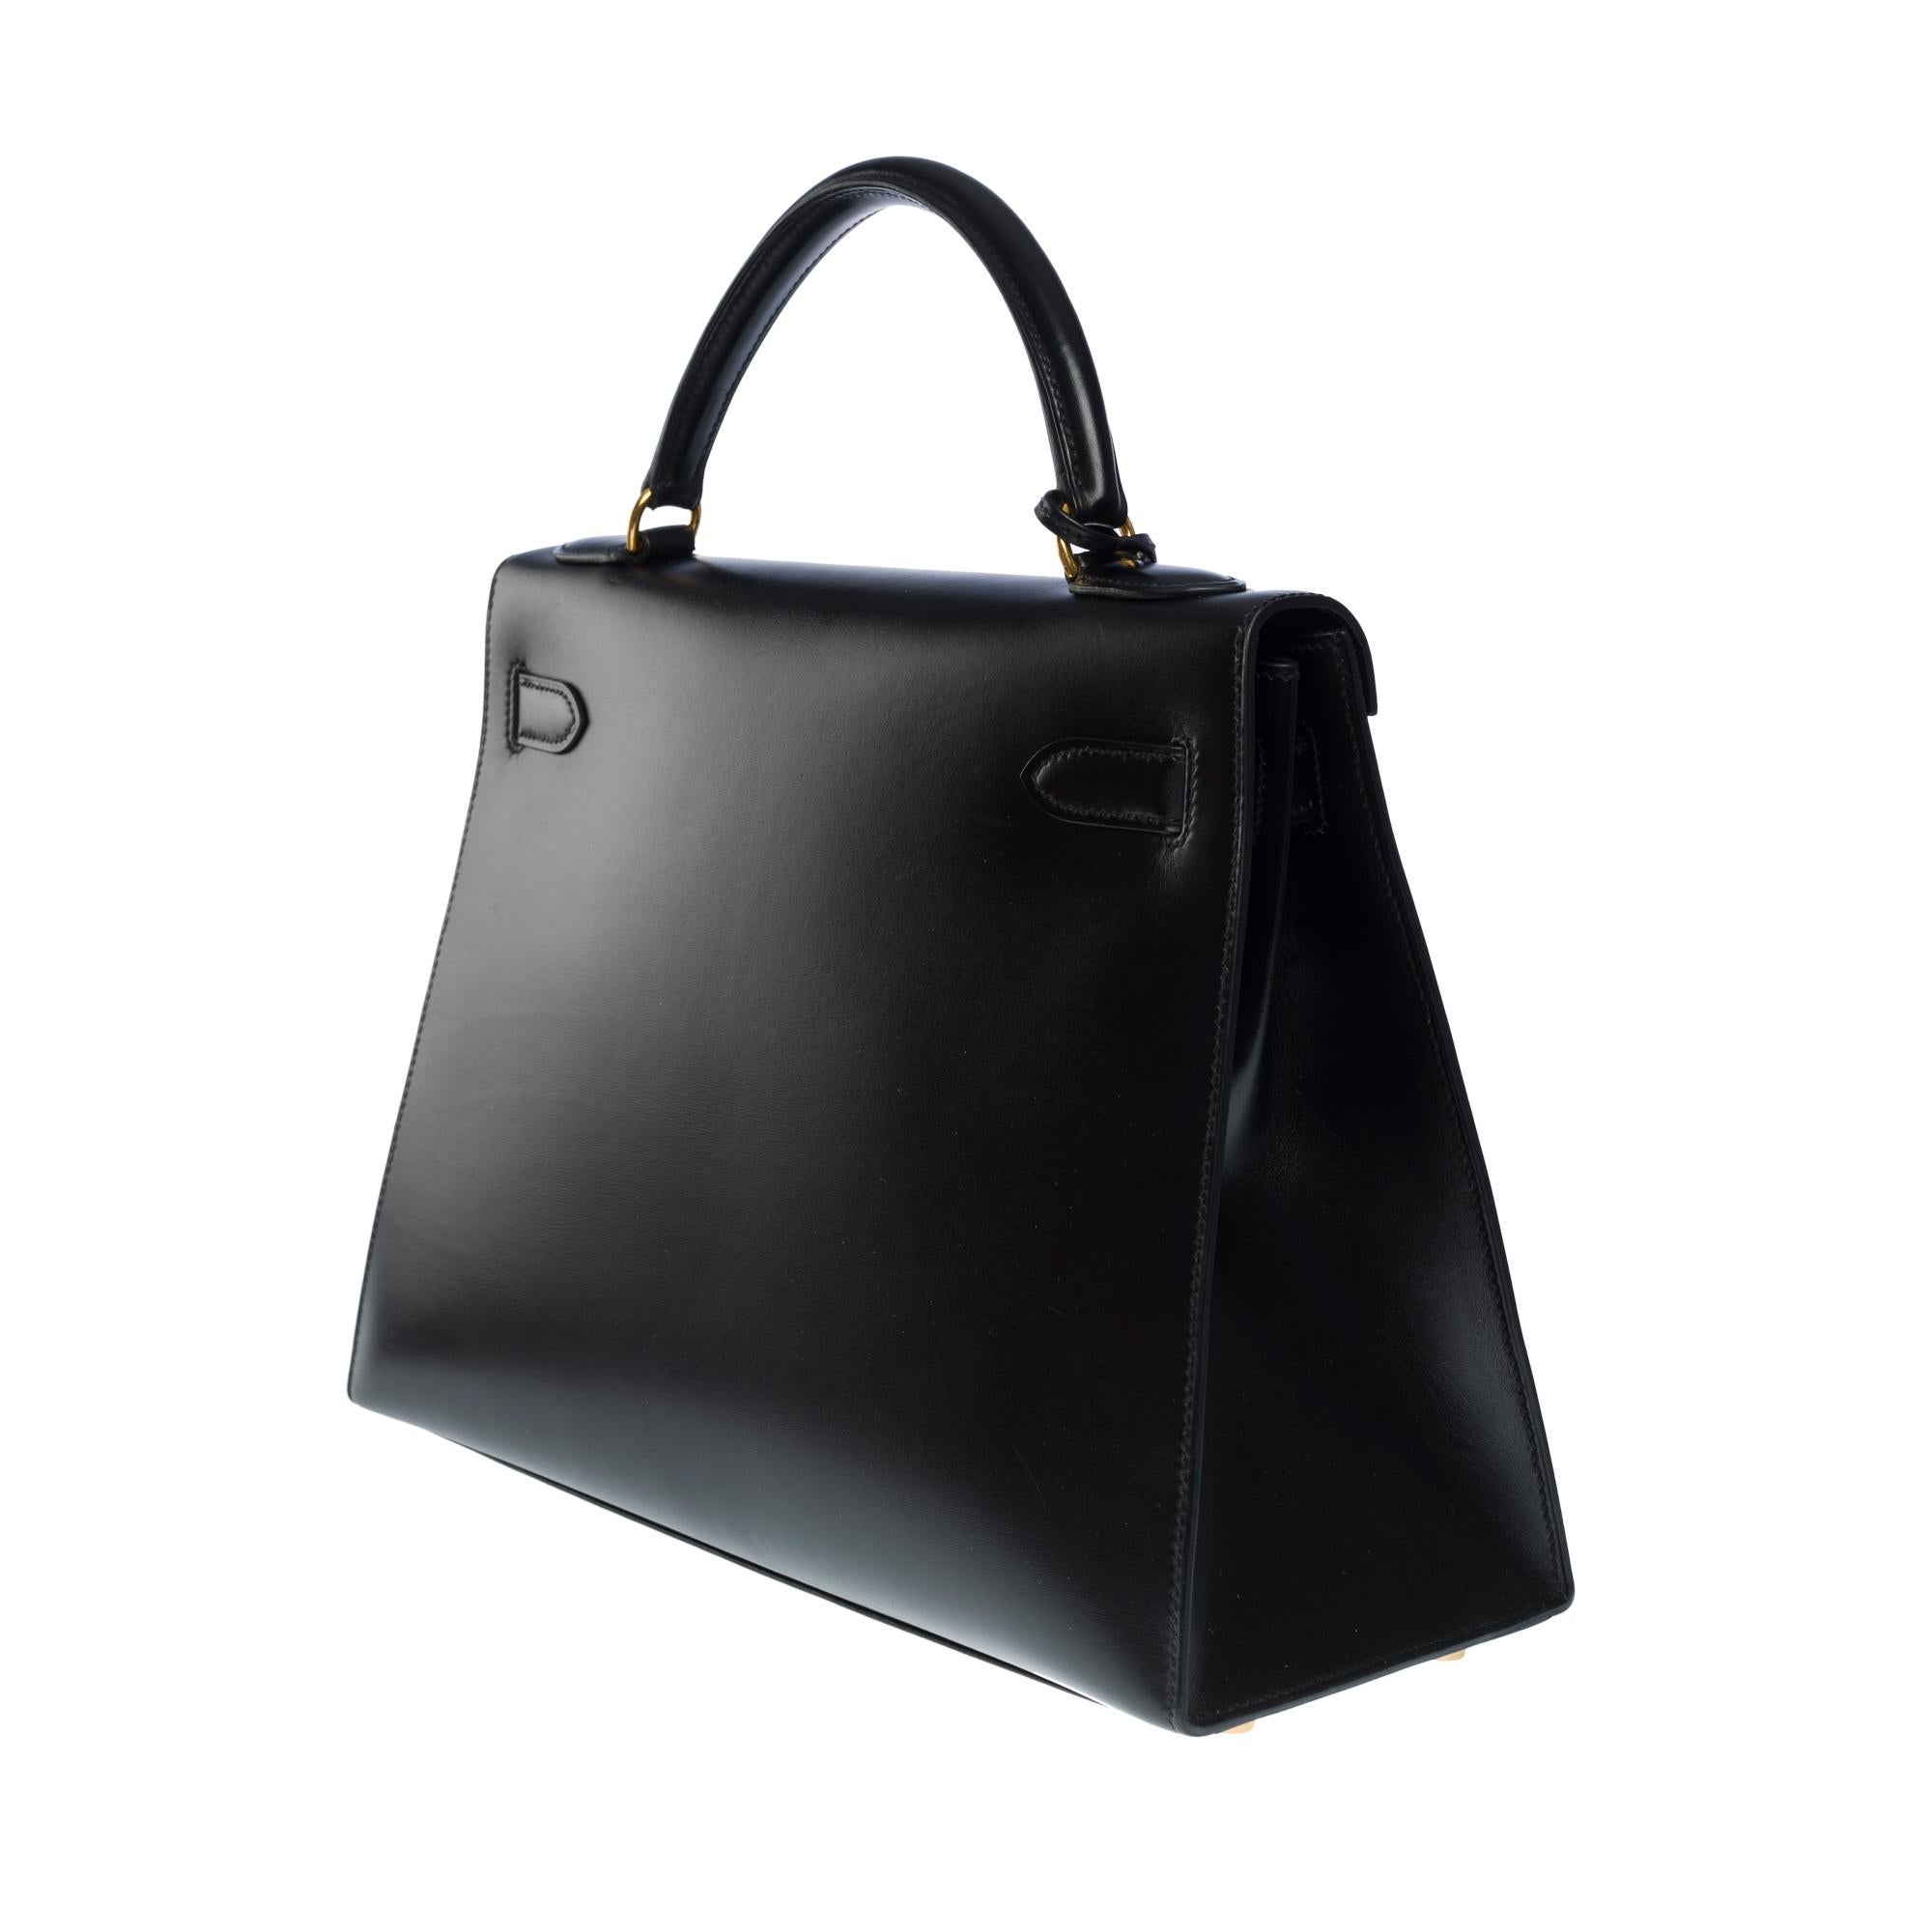 Women's Gorgeous Hermès Kelly 32 sellier handbag strap in black box calf leather, GHW For Sale